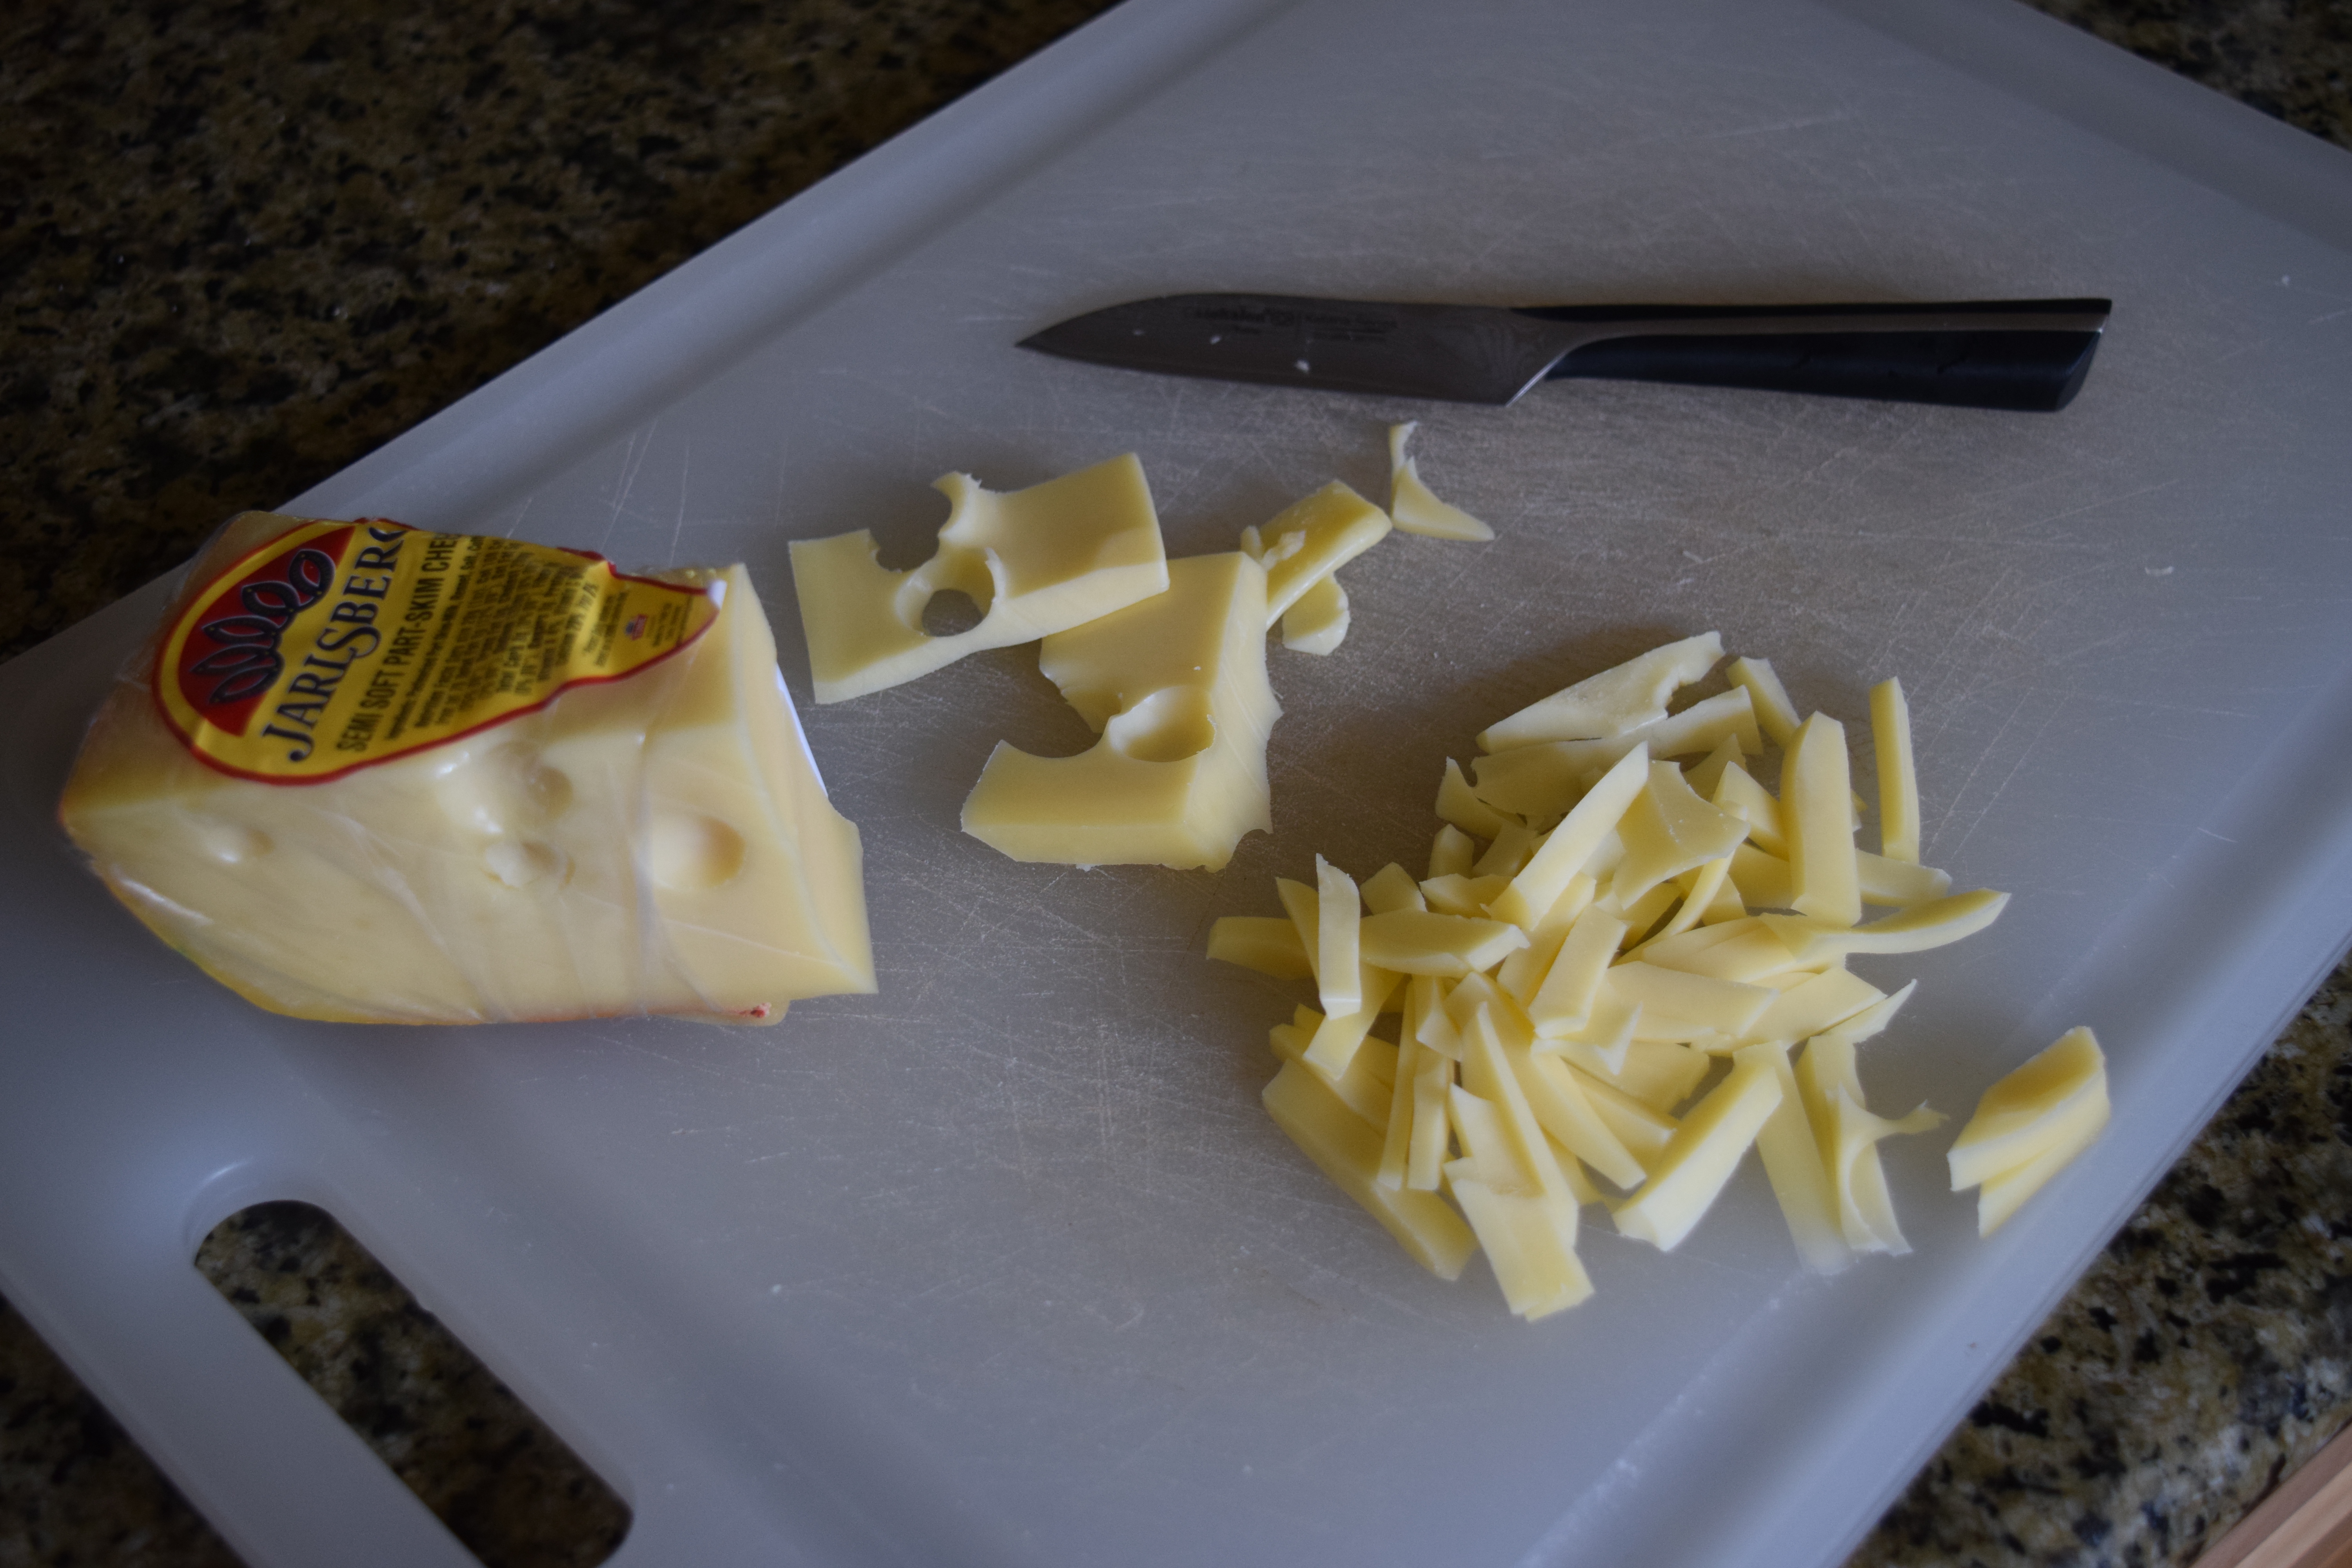 Jarlsberg cheese cut up